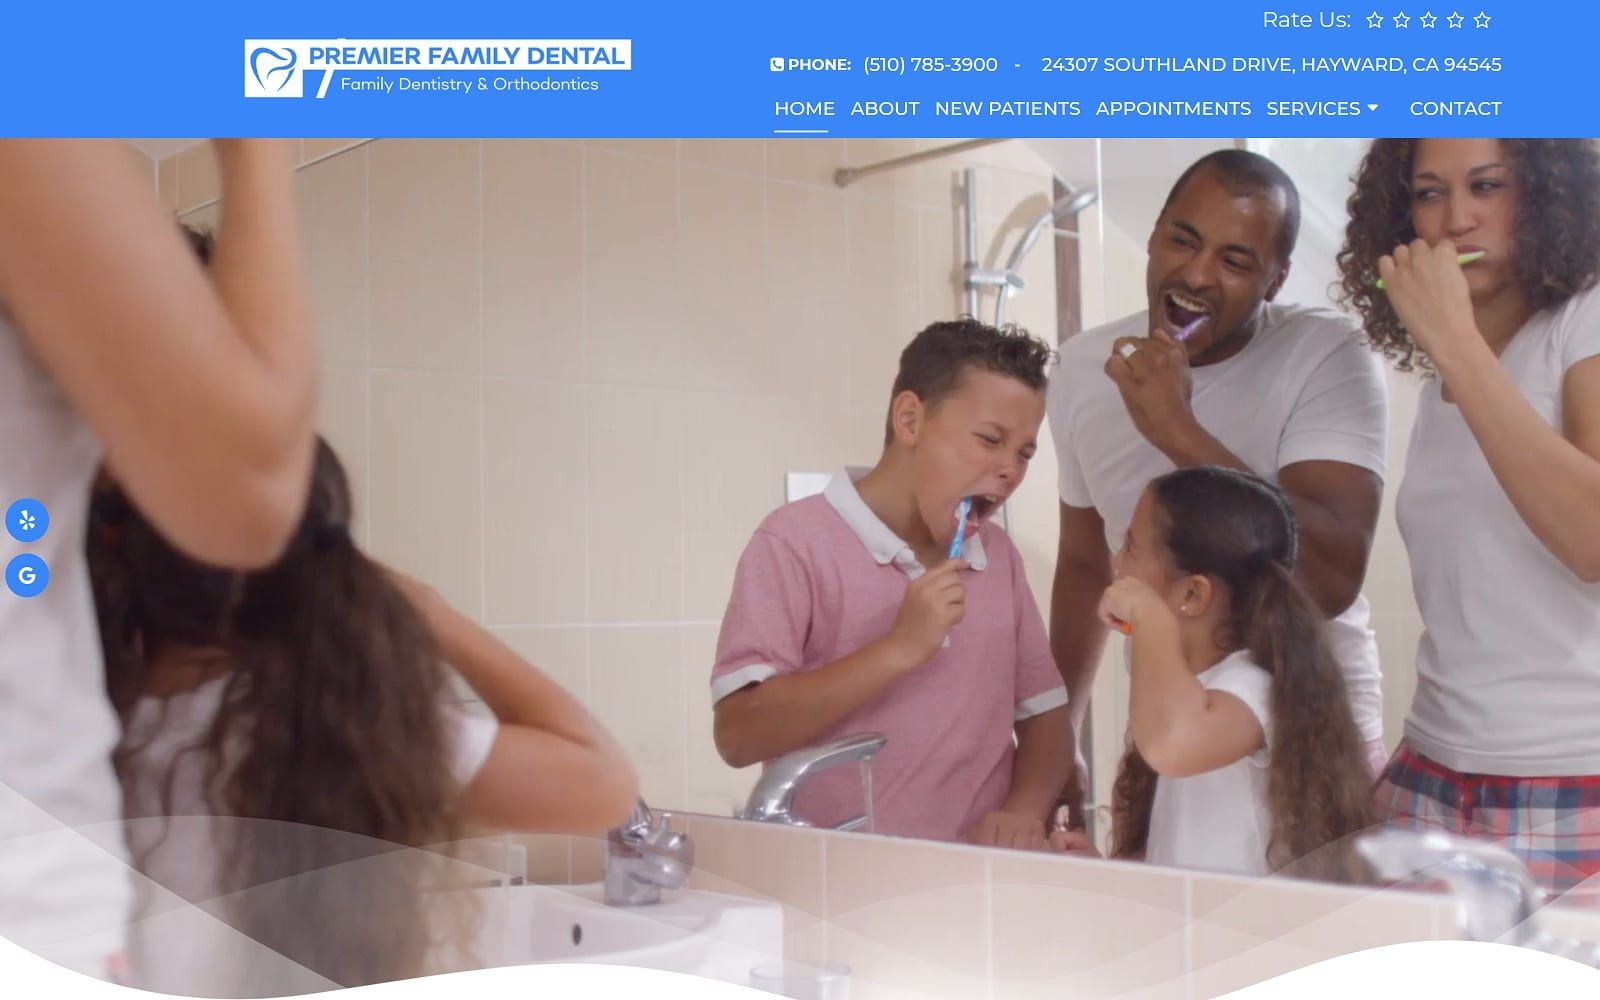 The screenshot of premier family dental premierfamdental. Com website